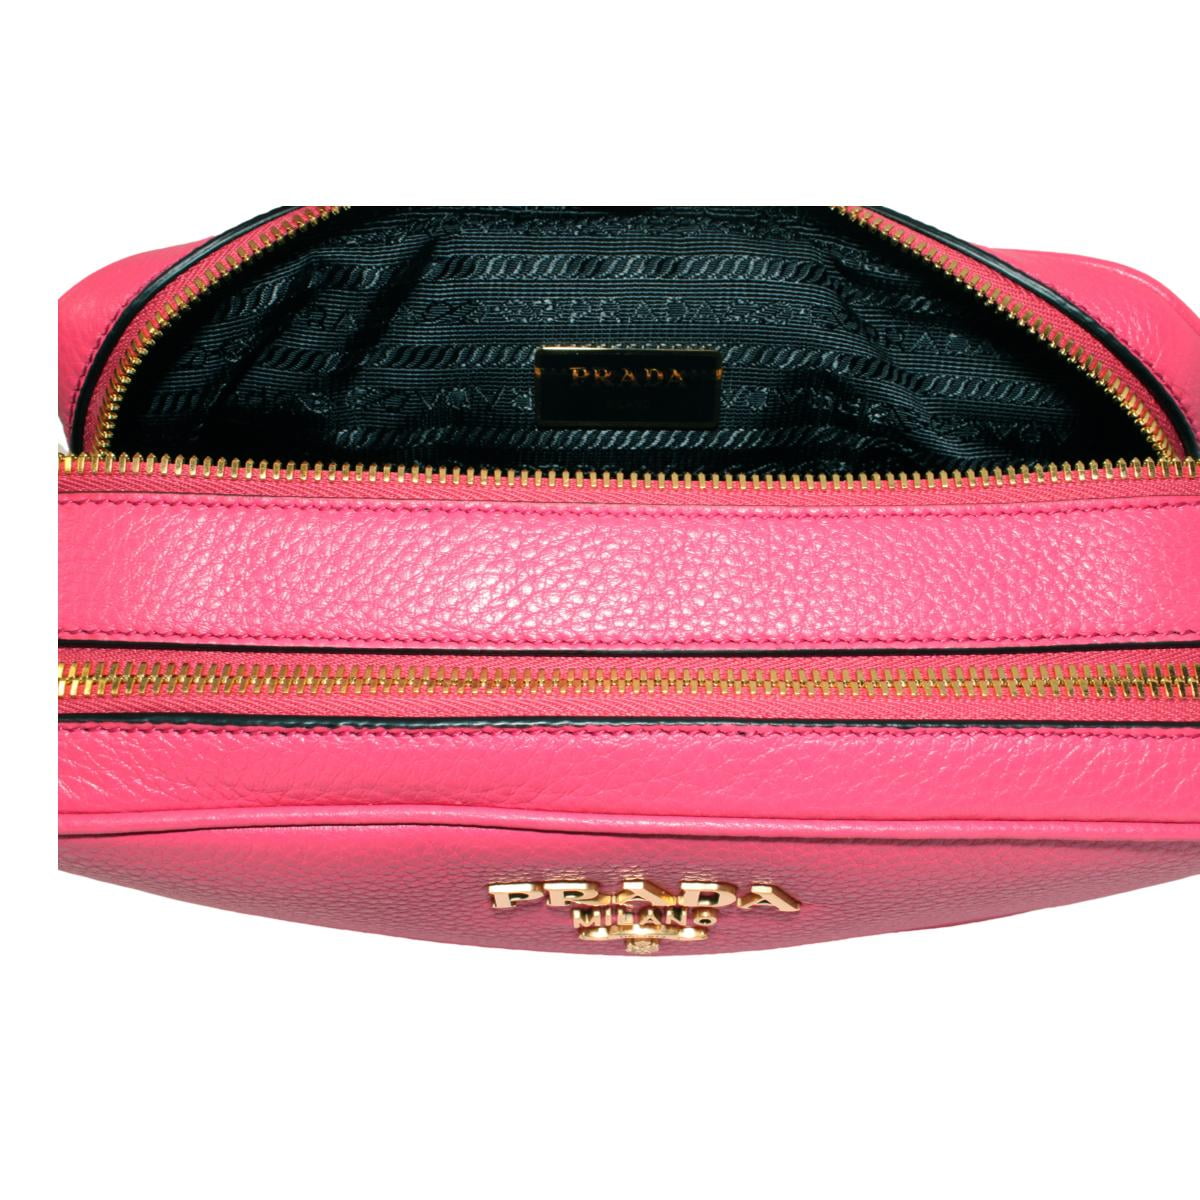 Prada Women's Vitello Phenix 1bh079 Pink Leather Cross Body Bag: Handbags